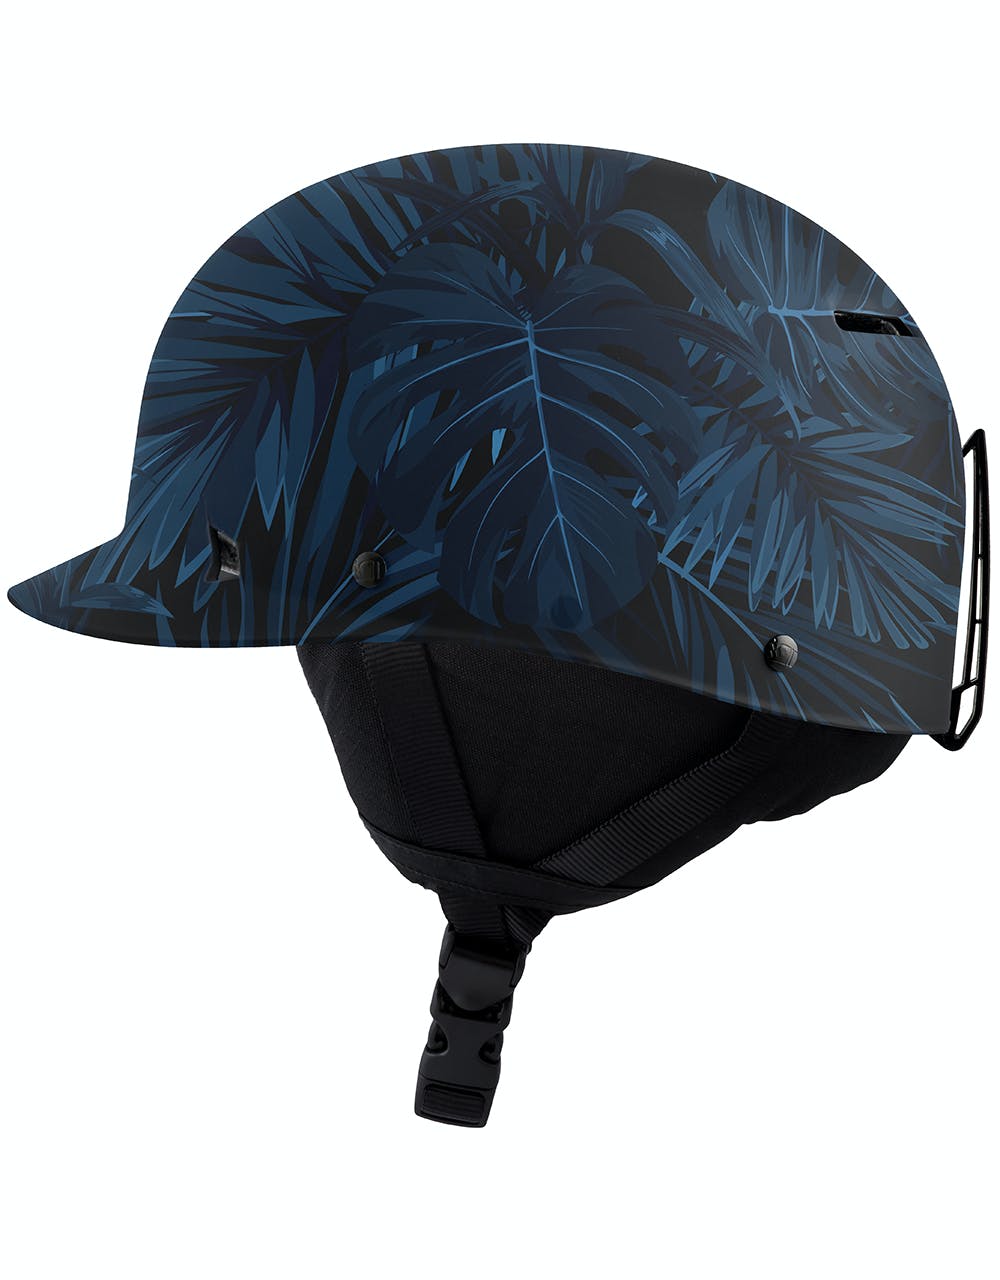 Sandbox Classic 2.0 2020 Snowboard Helmet - Tropic Storm